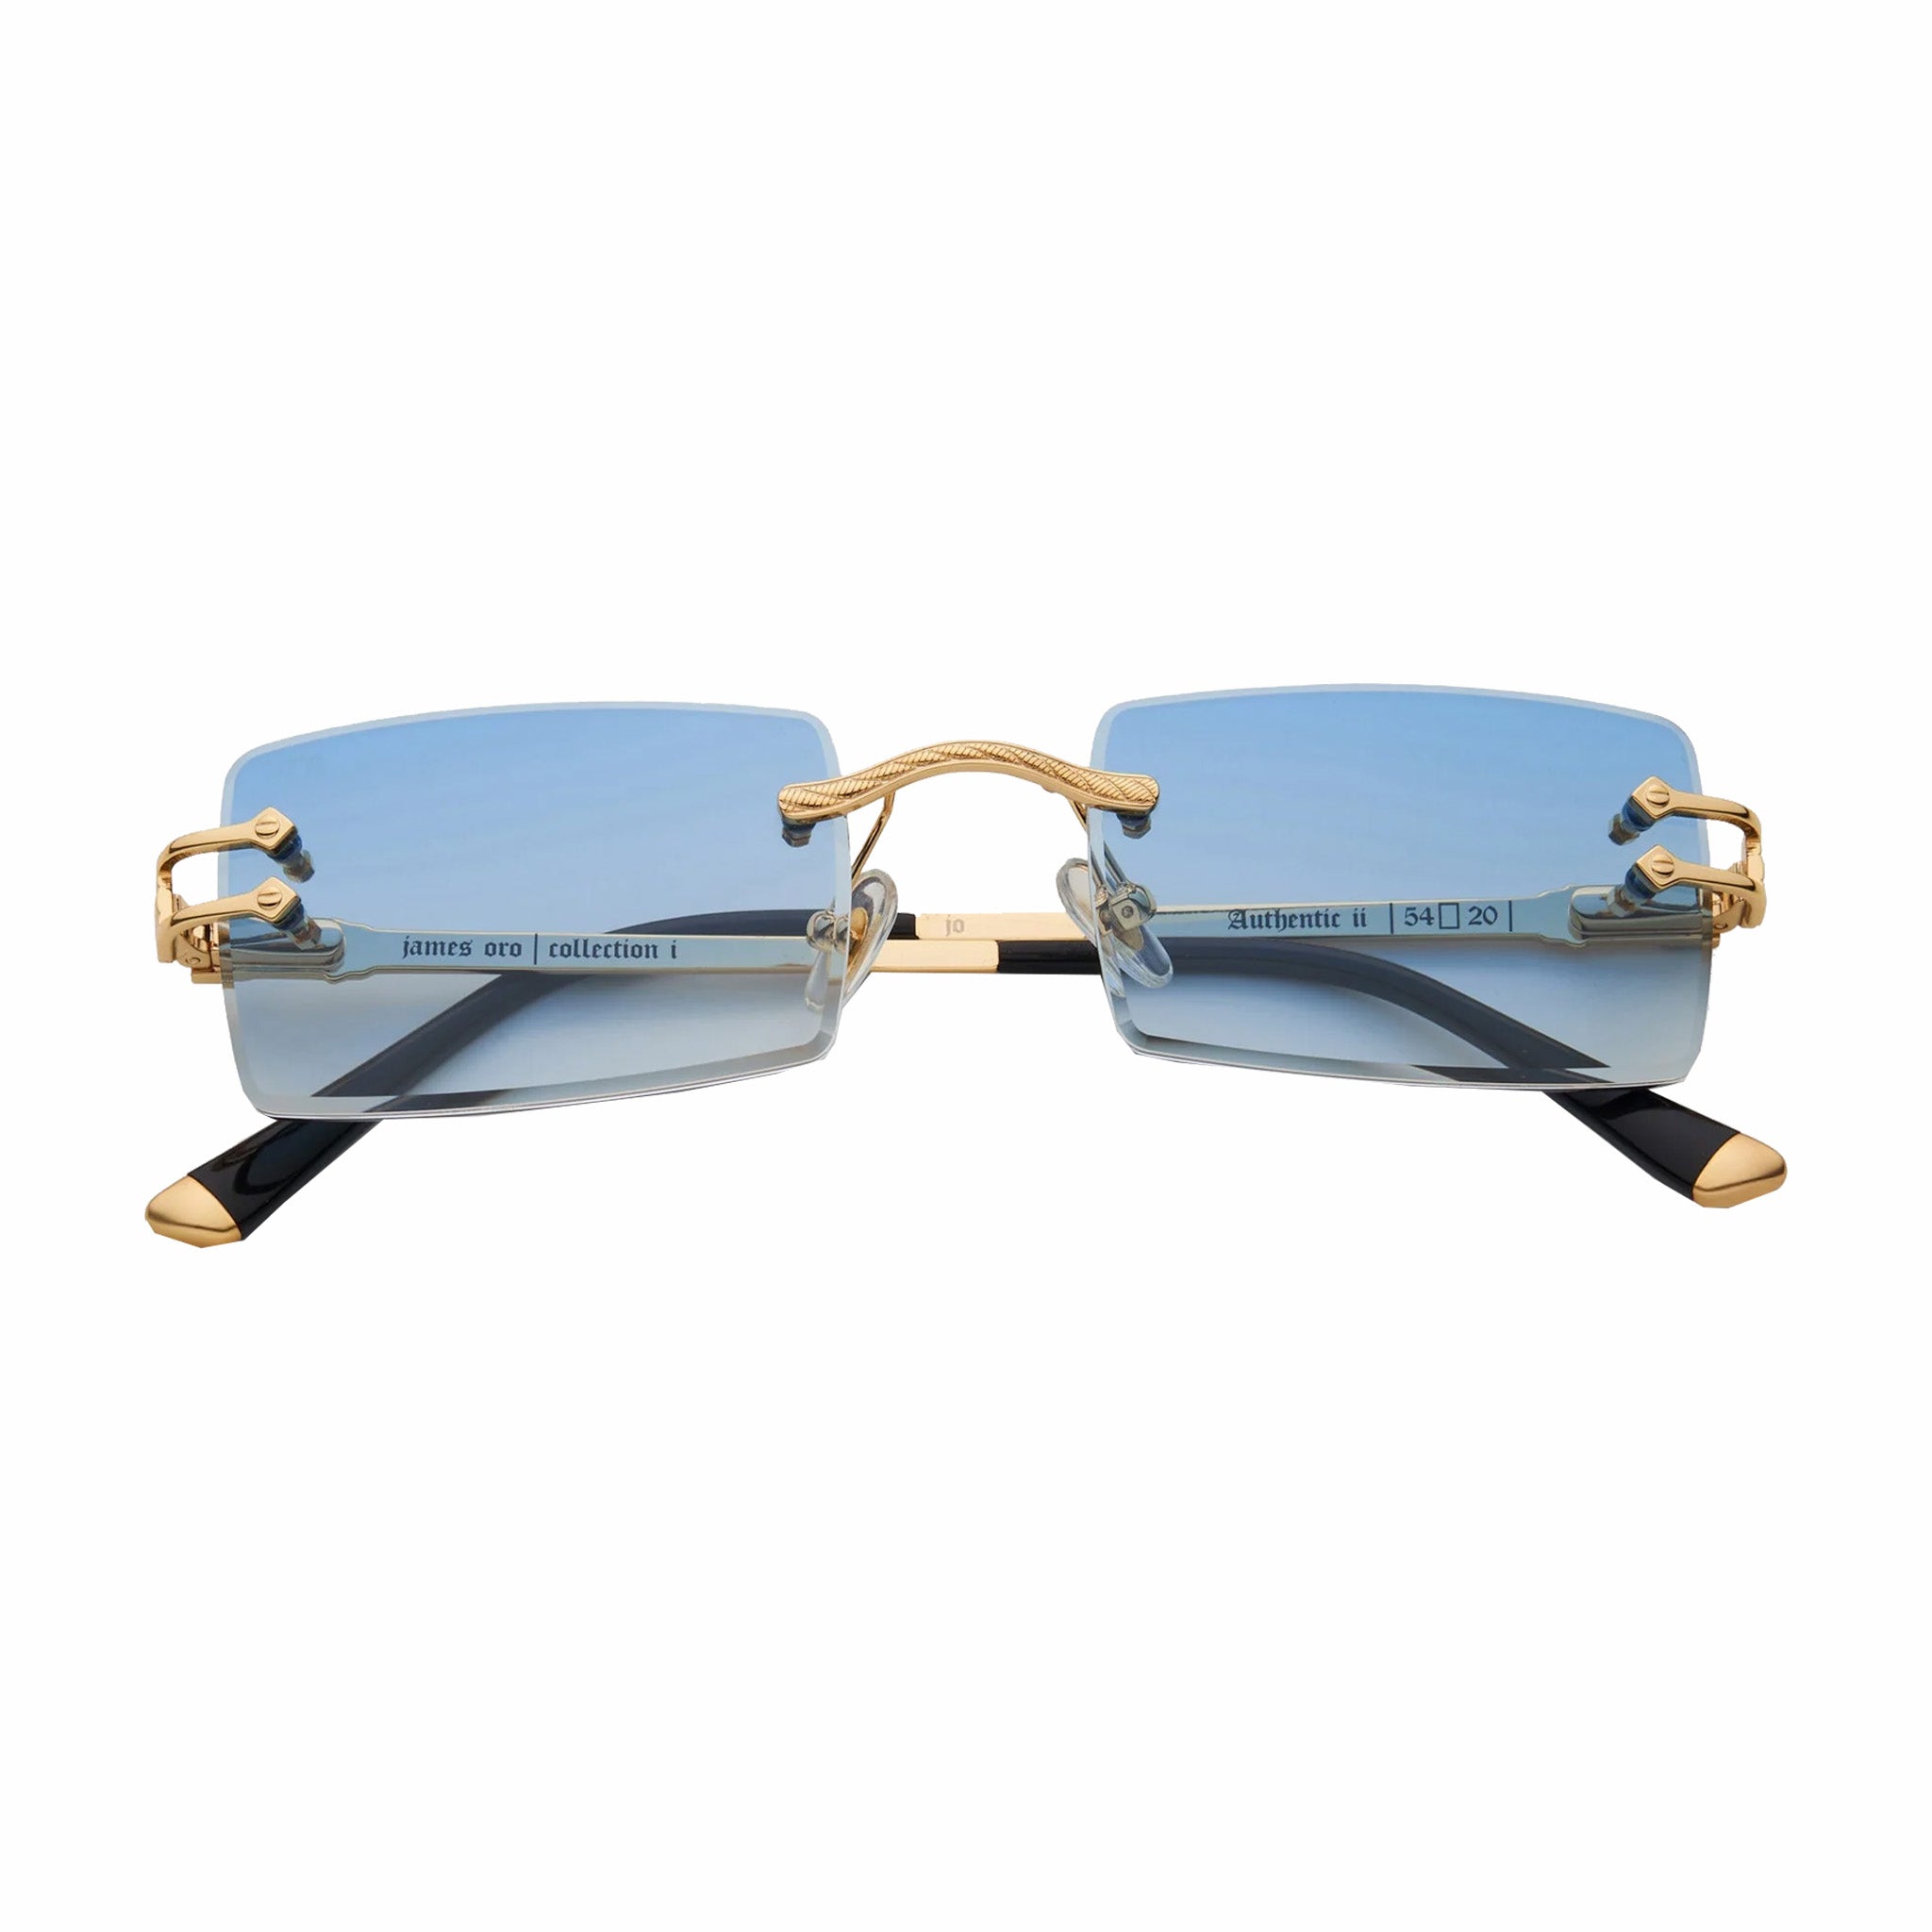 James Oro Blue Tint Gold Authentic II Sunglasses (Blue) - August Shop